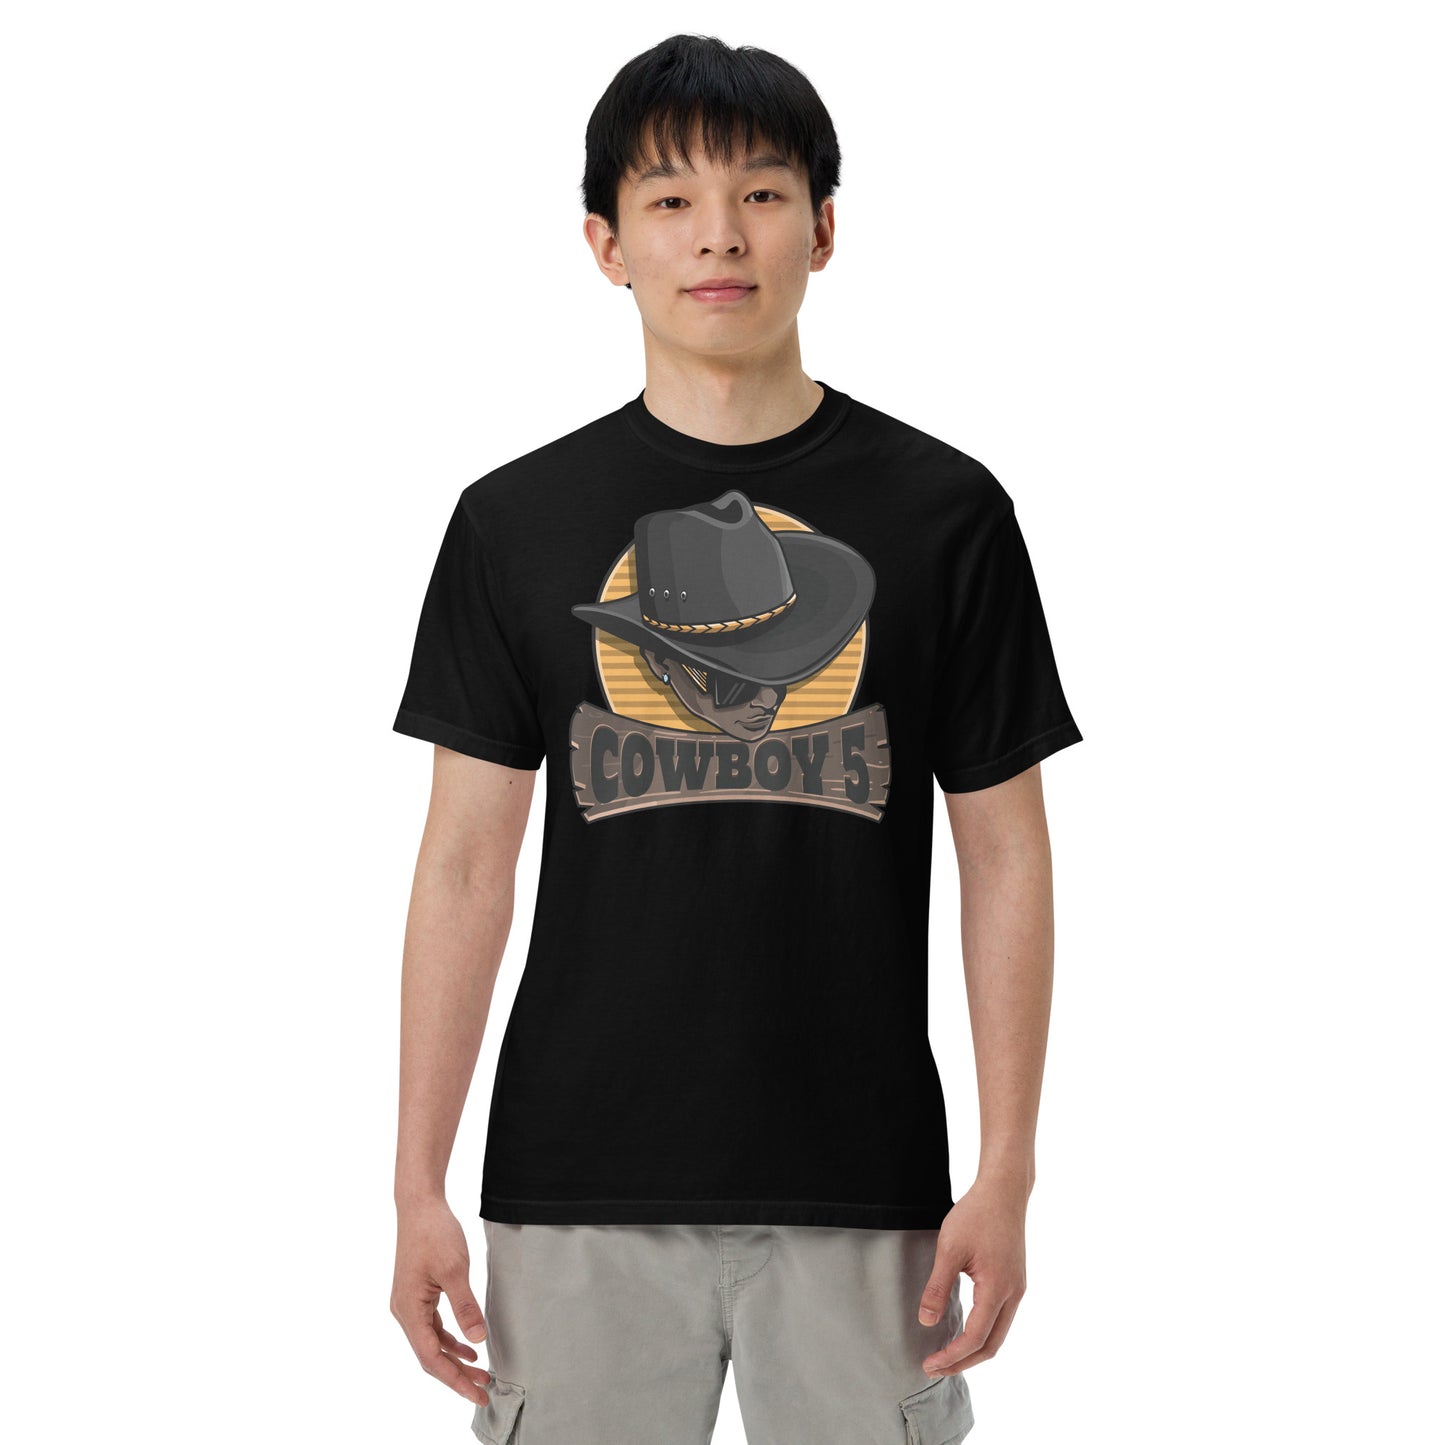 Cowboy5 t-shirt